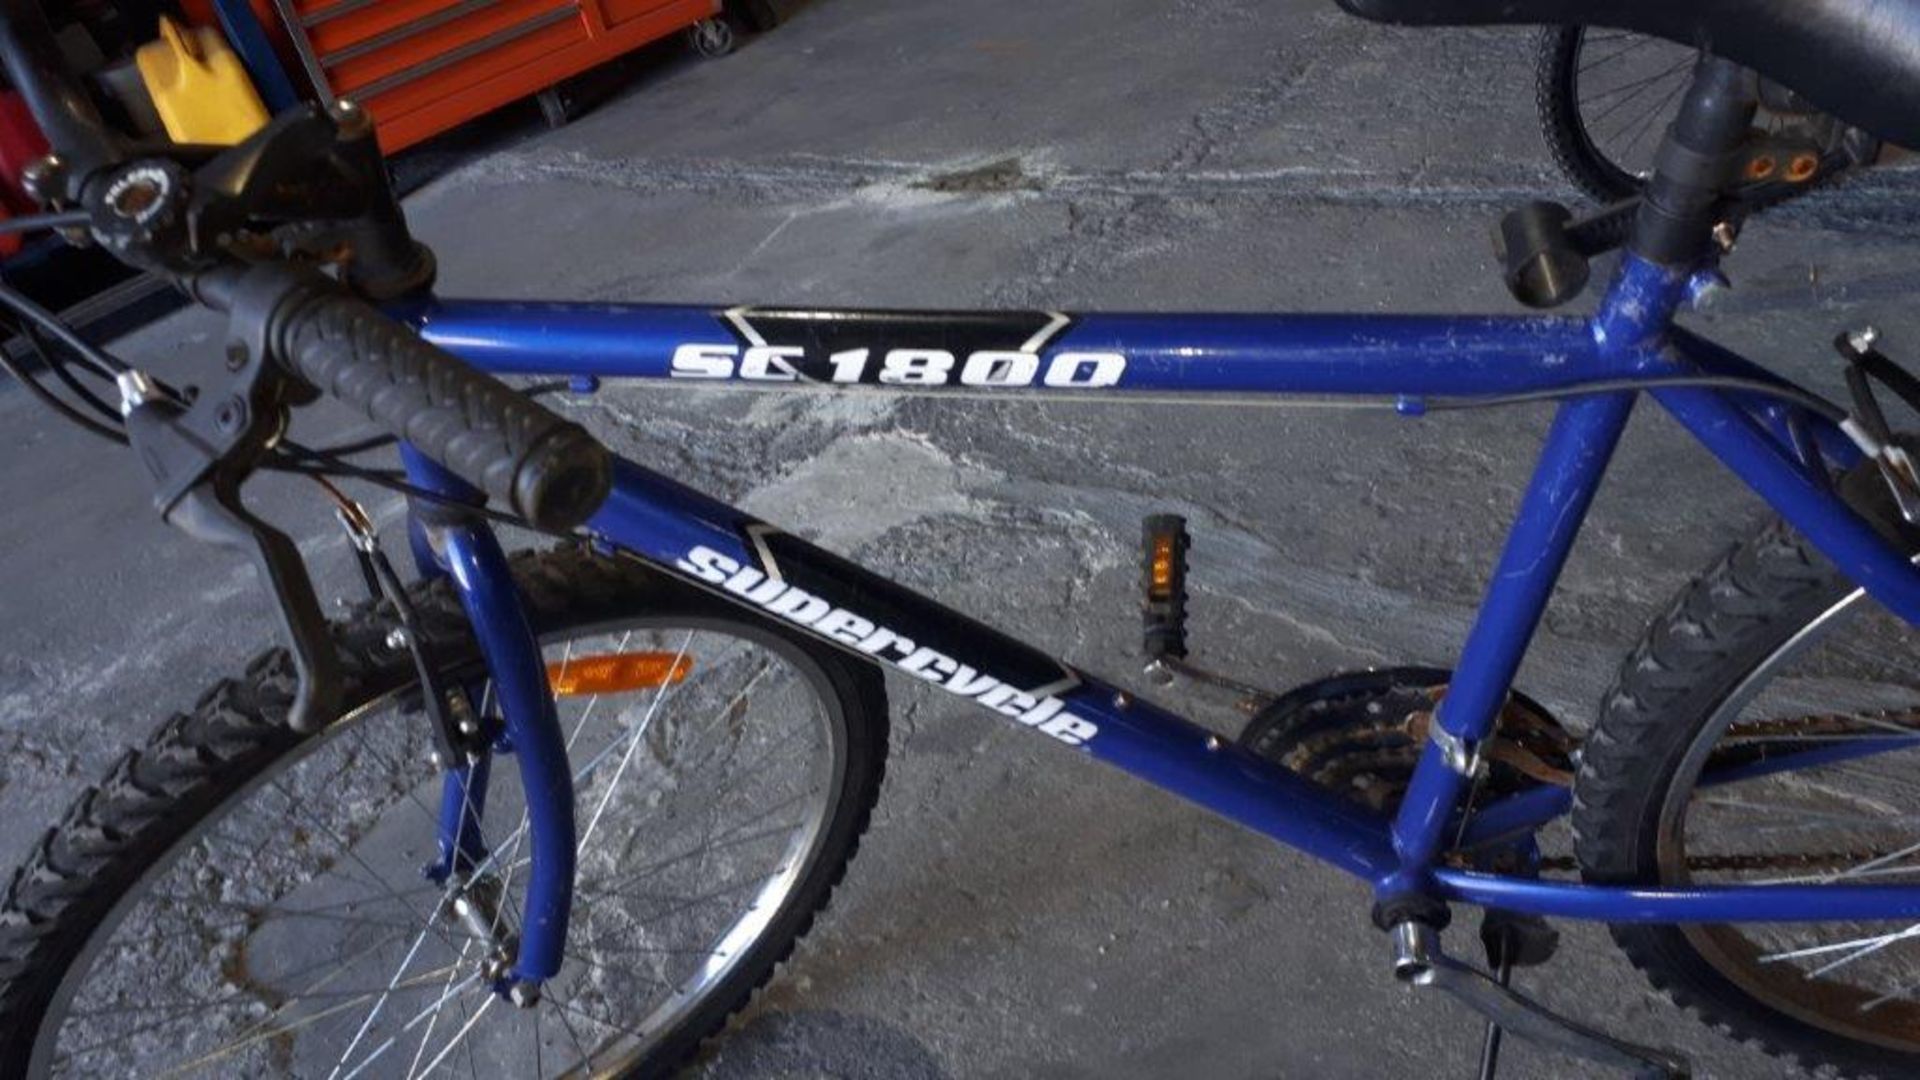 SUPERCYCLE mod: SC1800 2-wheel Bike - Image 2 of 3